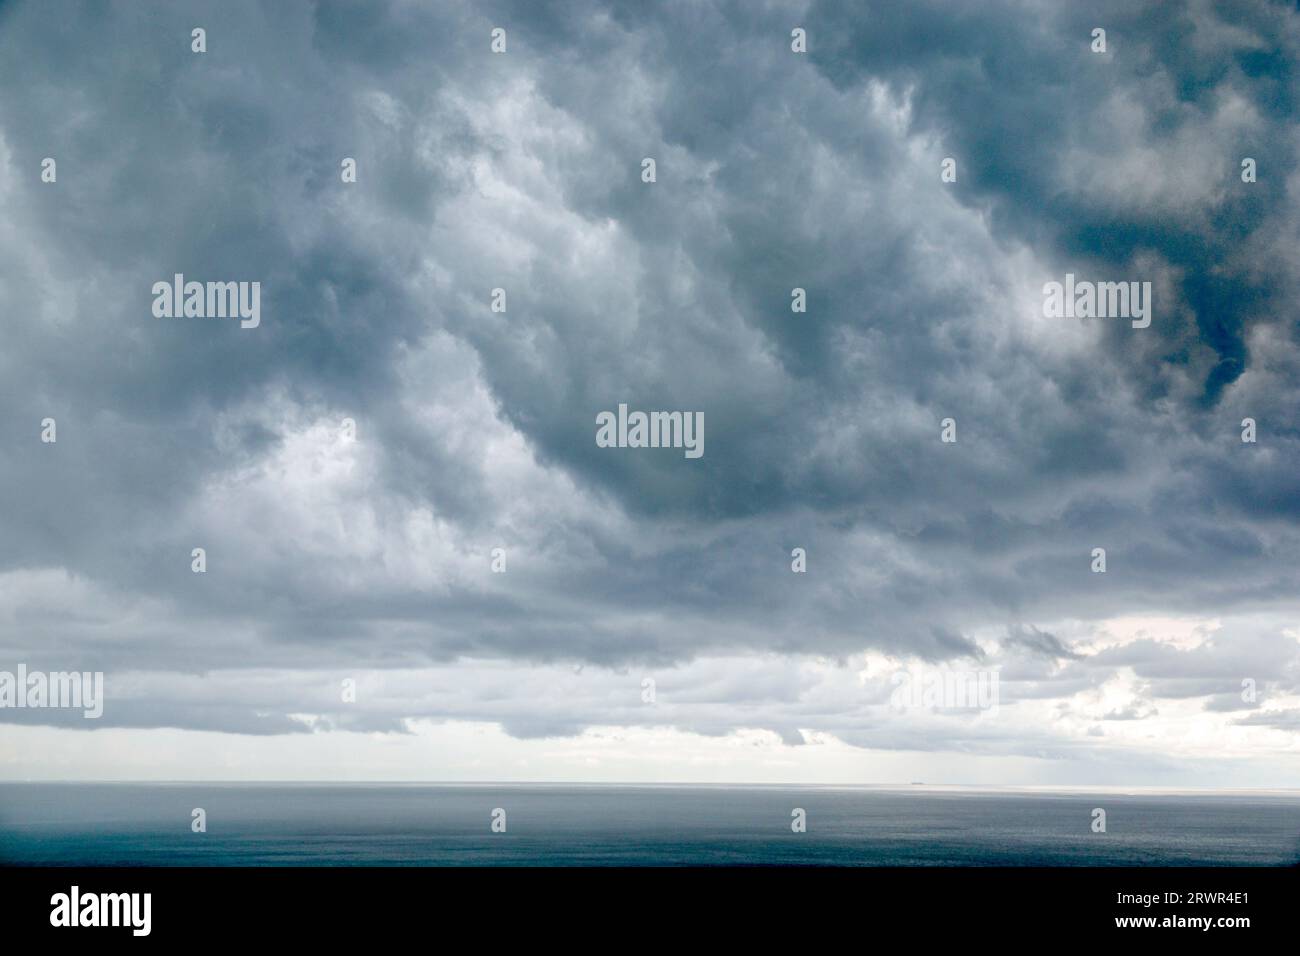 Miami Beach Florida,Atlantic Ocean,storm clouds weather climate change concept Stock Photo